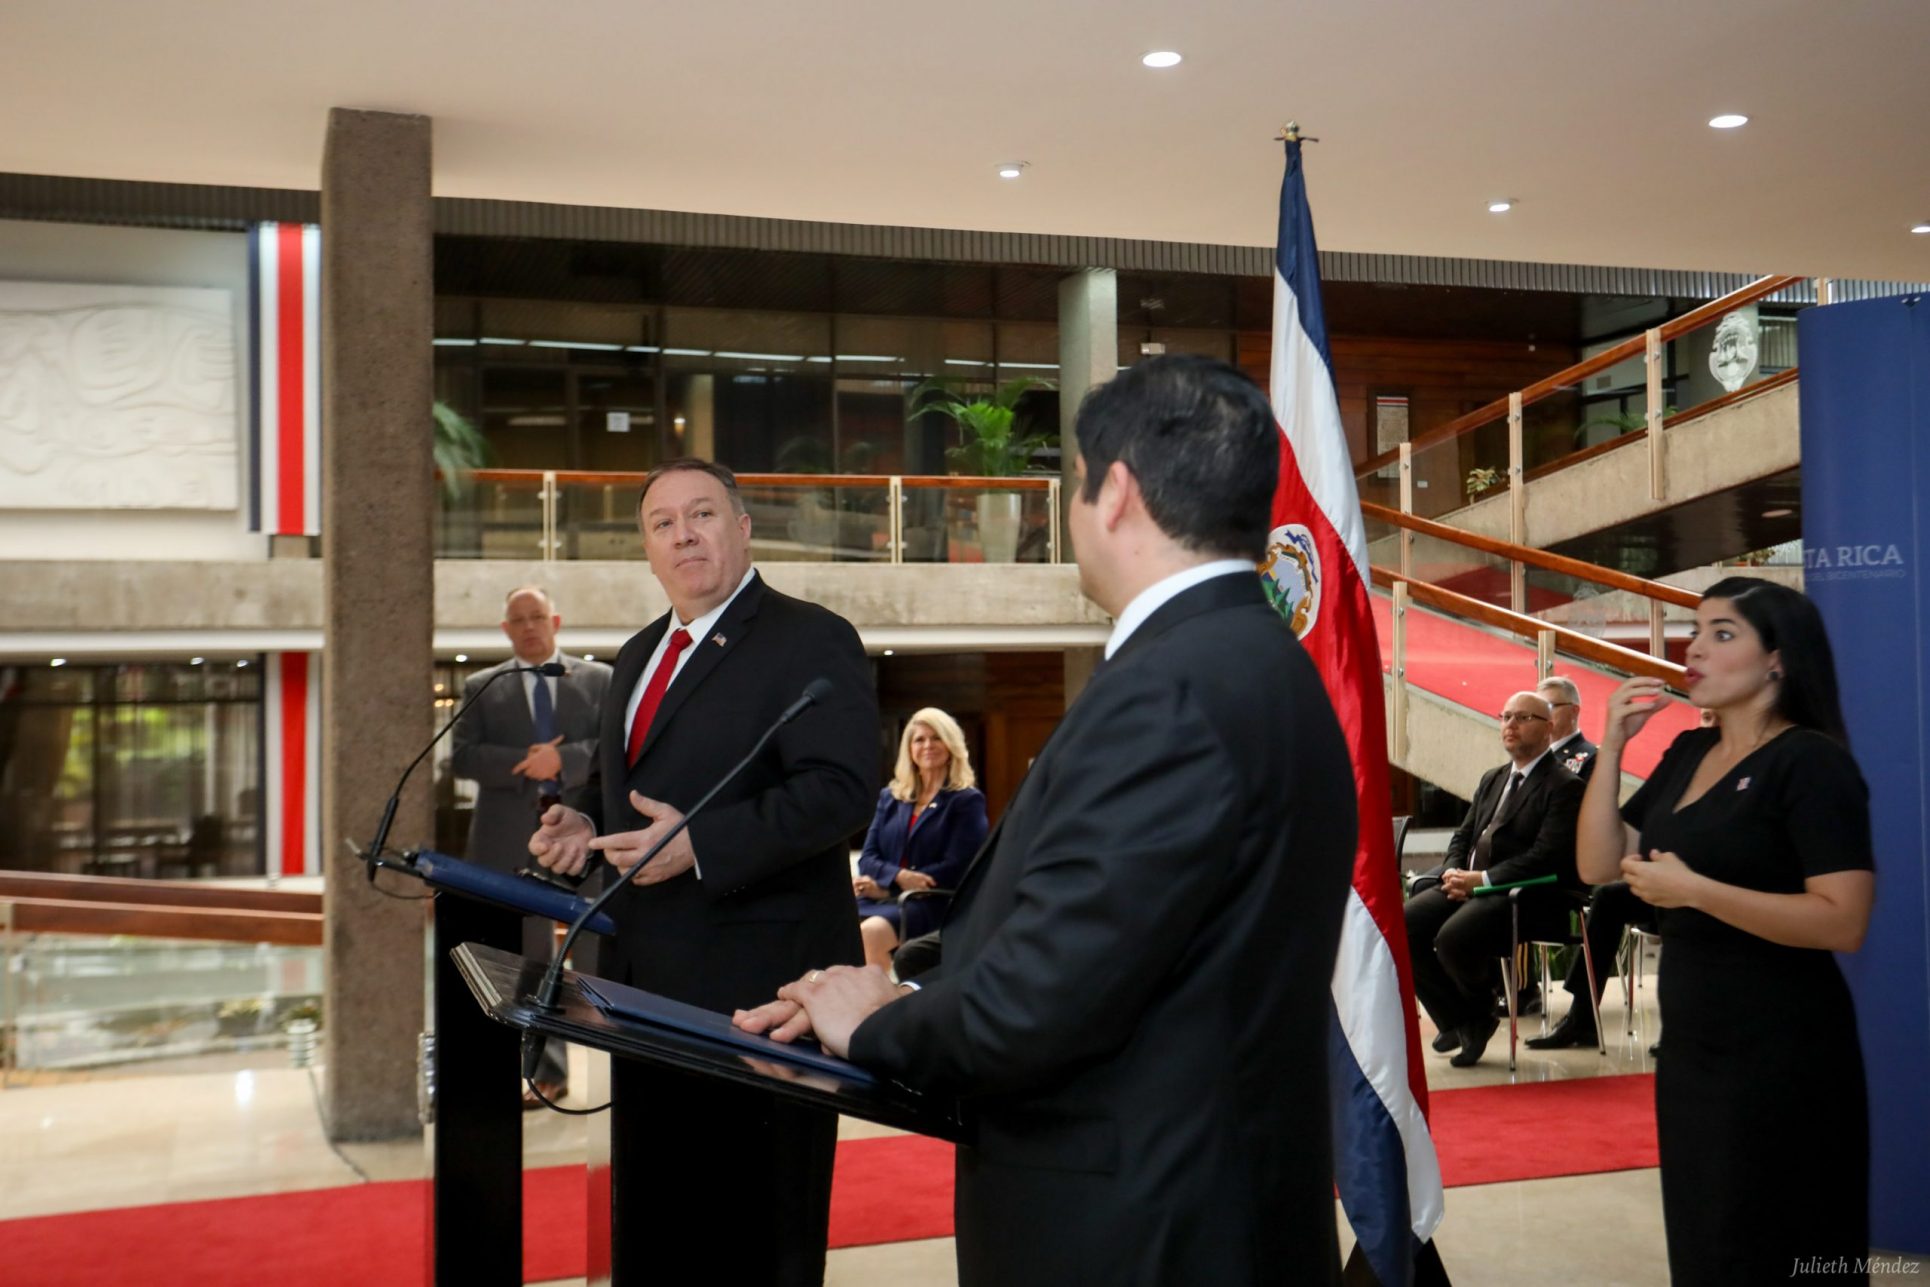 Estados Unidos advierte a Costa Rica sobre “promesas vacías” de China